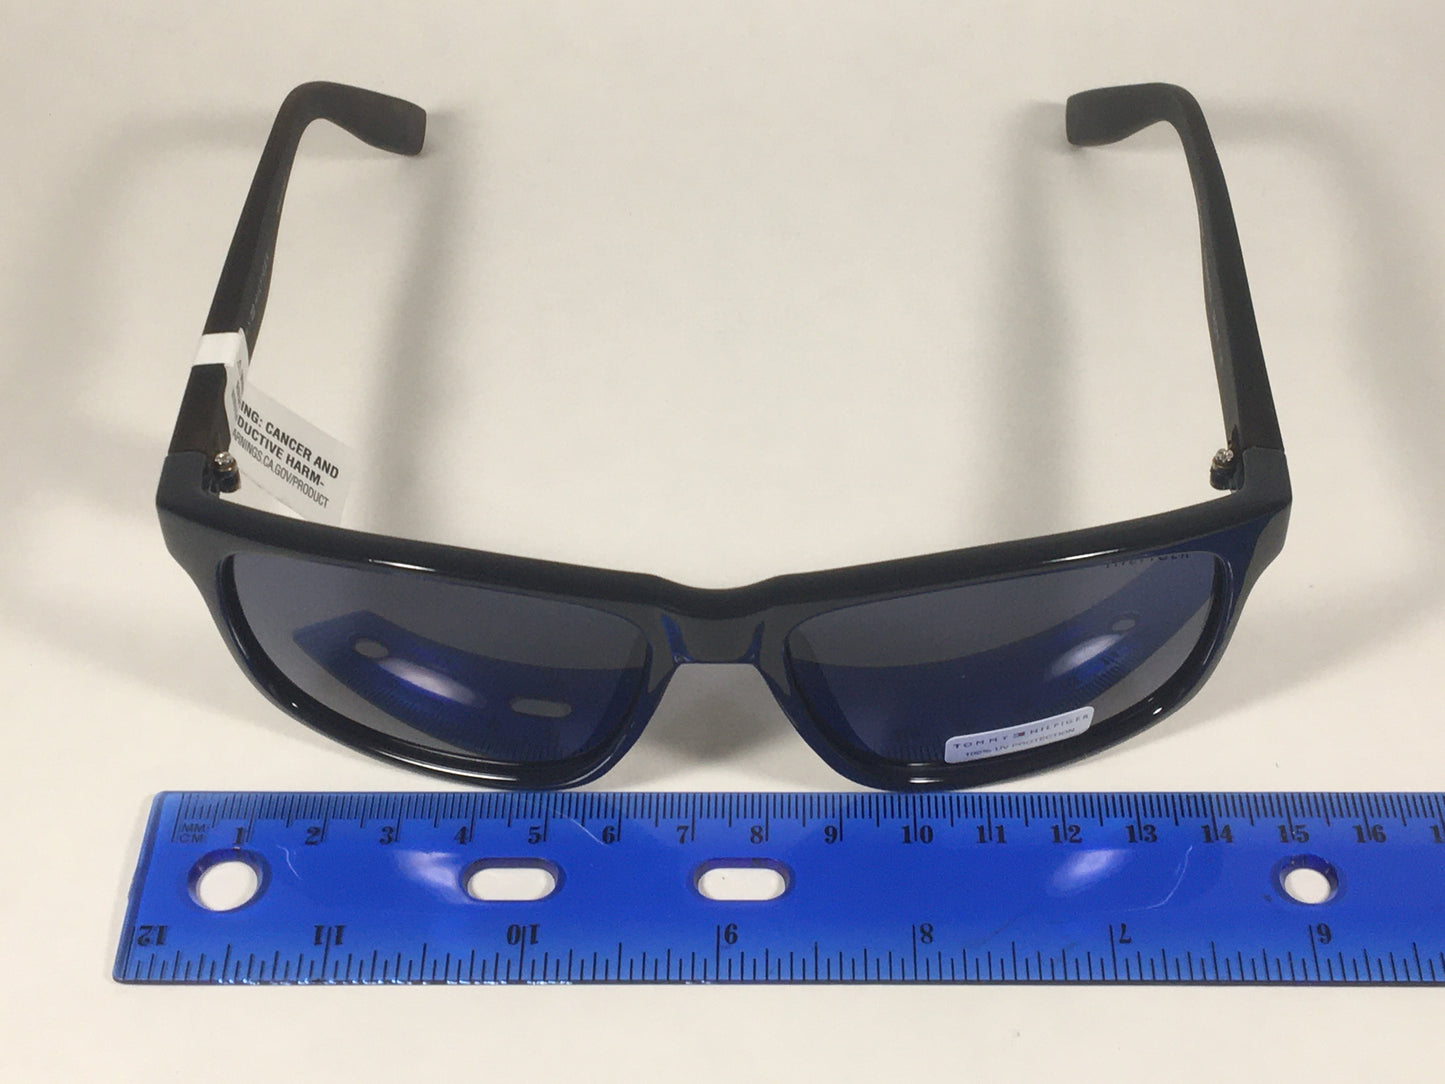 Tommy Hilfiger Luis Rectangular Sunglasses Black And Dark Tortoise Frame Gray Lens LUIS MP OM347 - Sunglasses